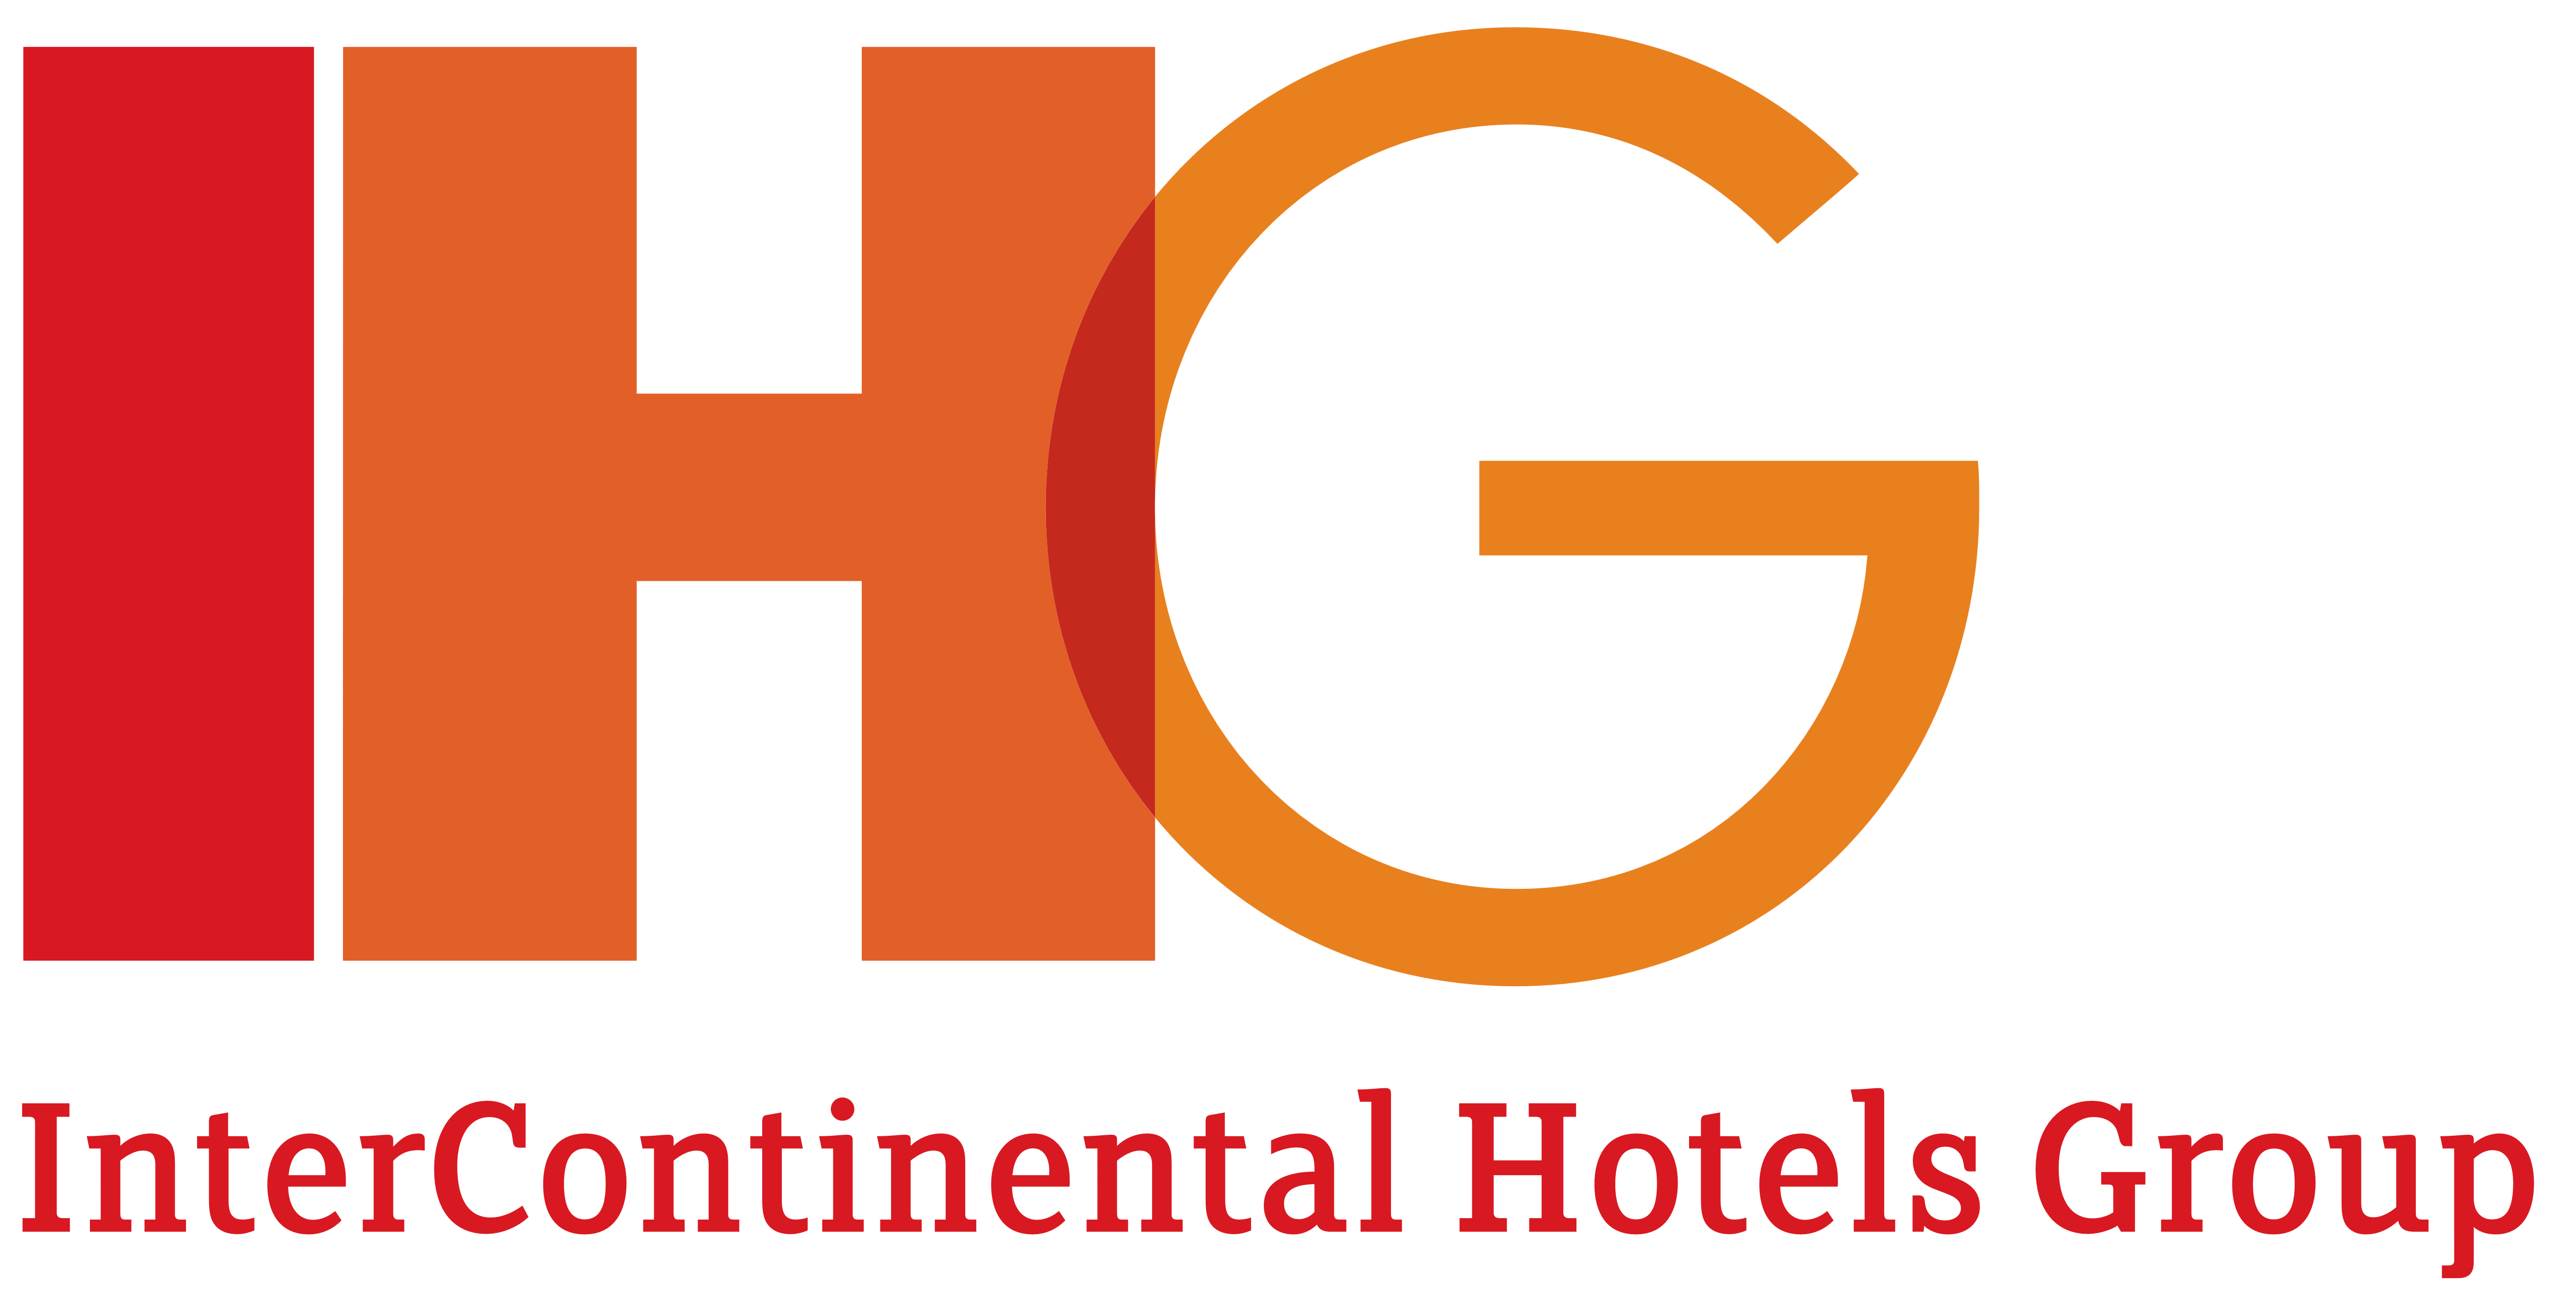 IHG InterContinental Hotels Group Logos Download